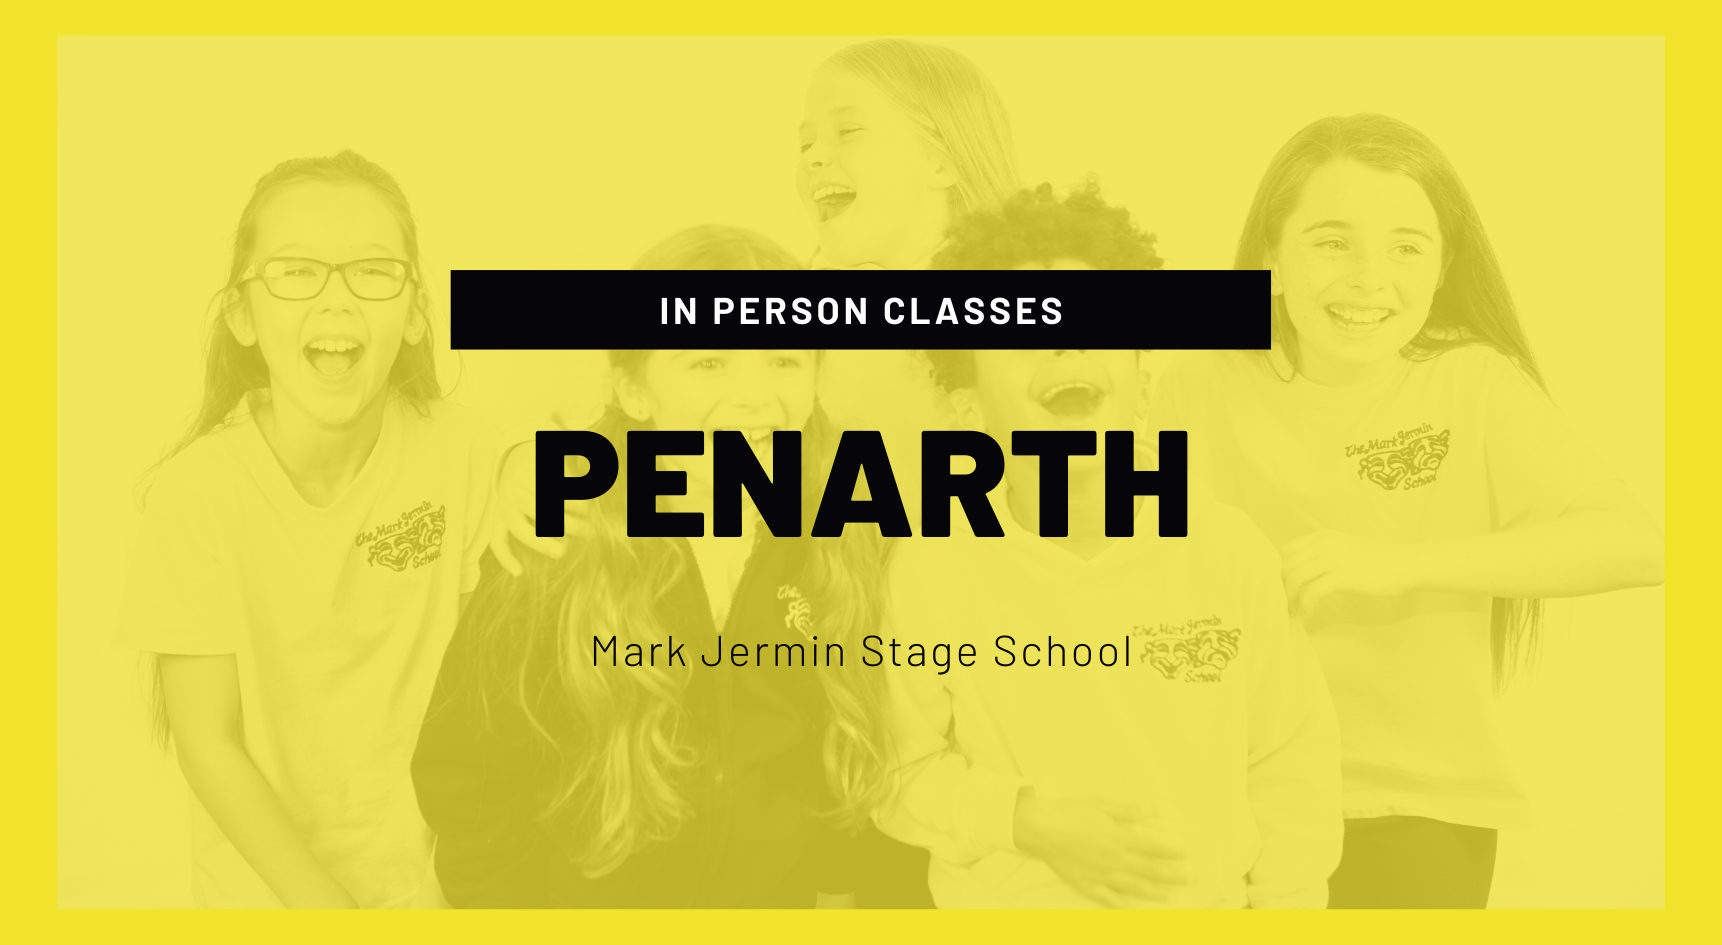 Mark Jermin Stage School: Penarth